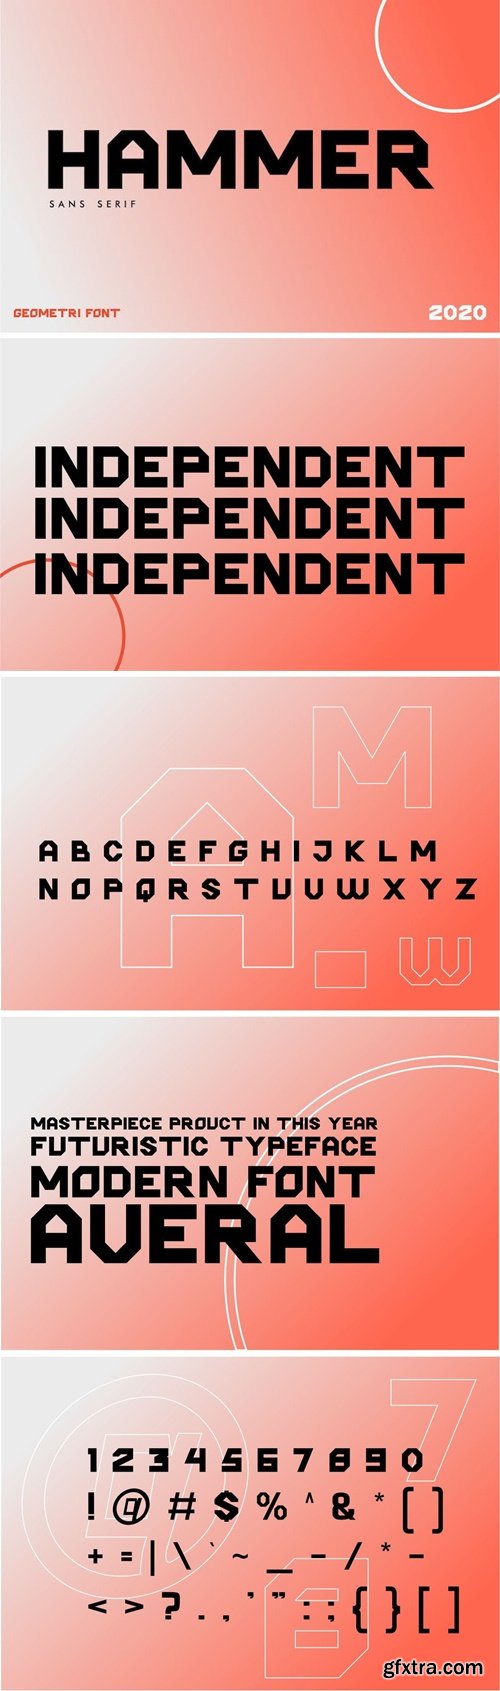 Hammer Futuristic Font